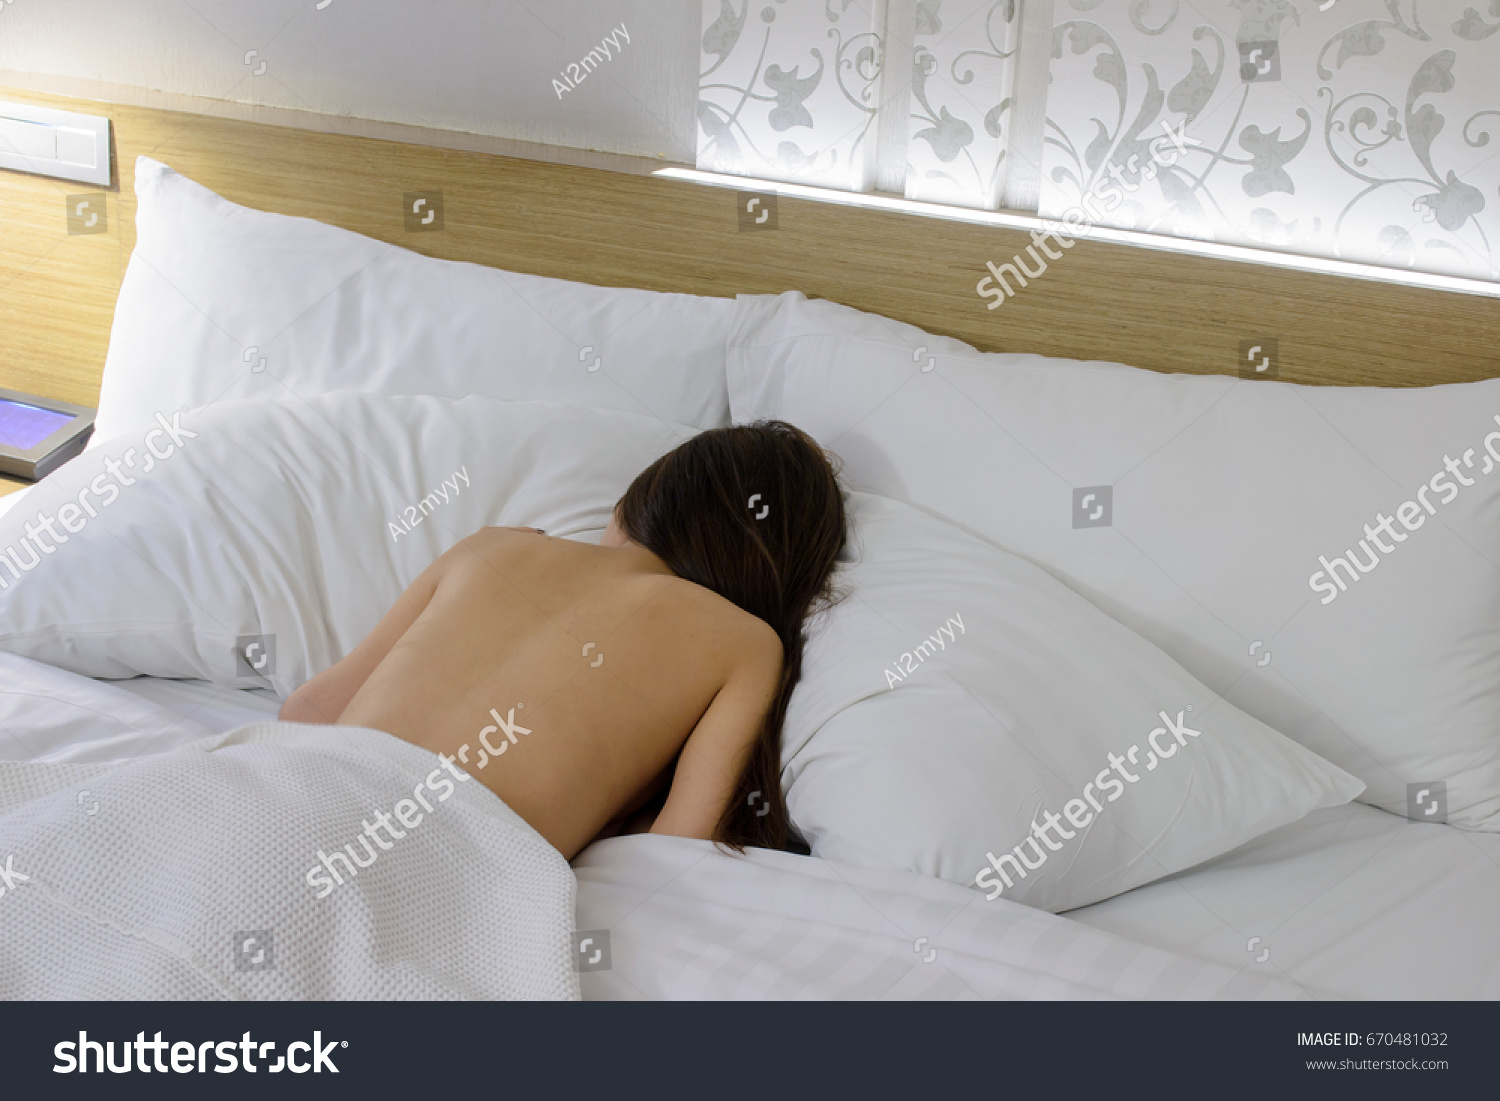 Naked Woman Sleep On White Pillow Stock picture